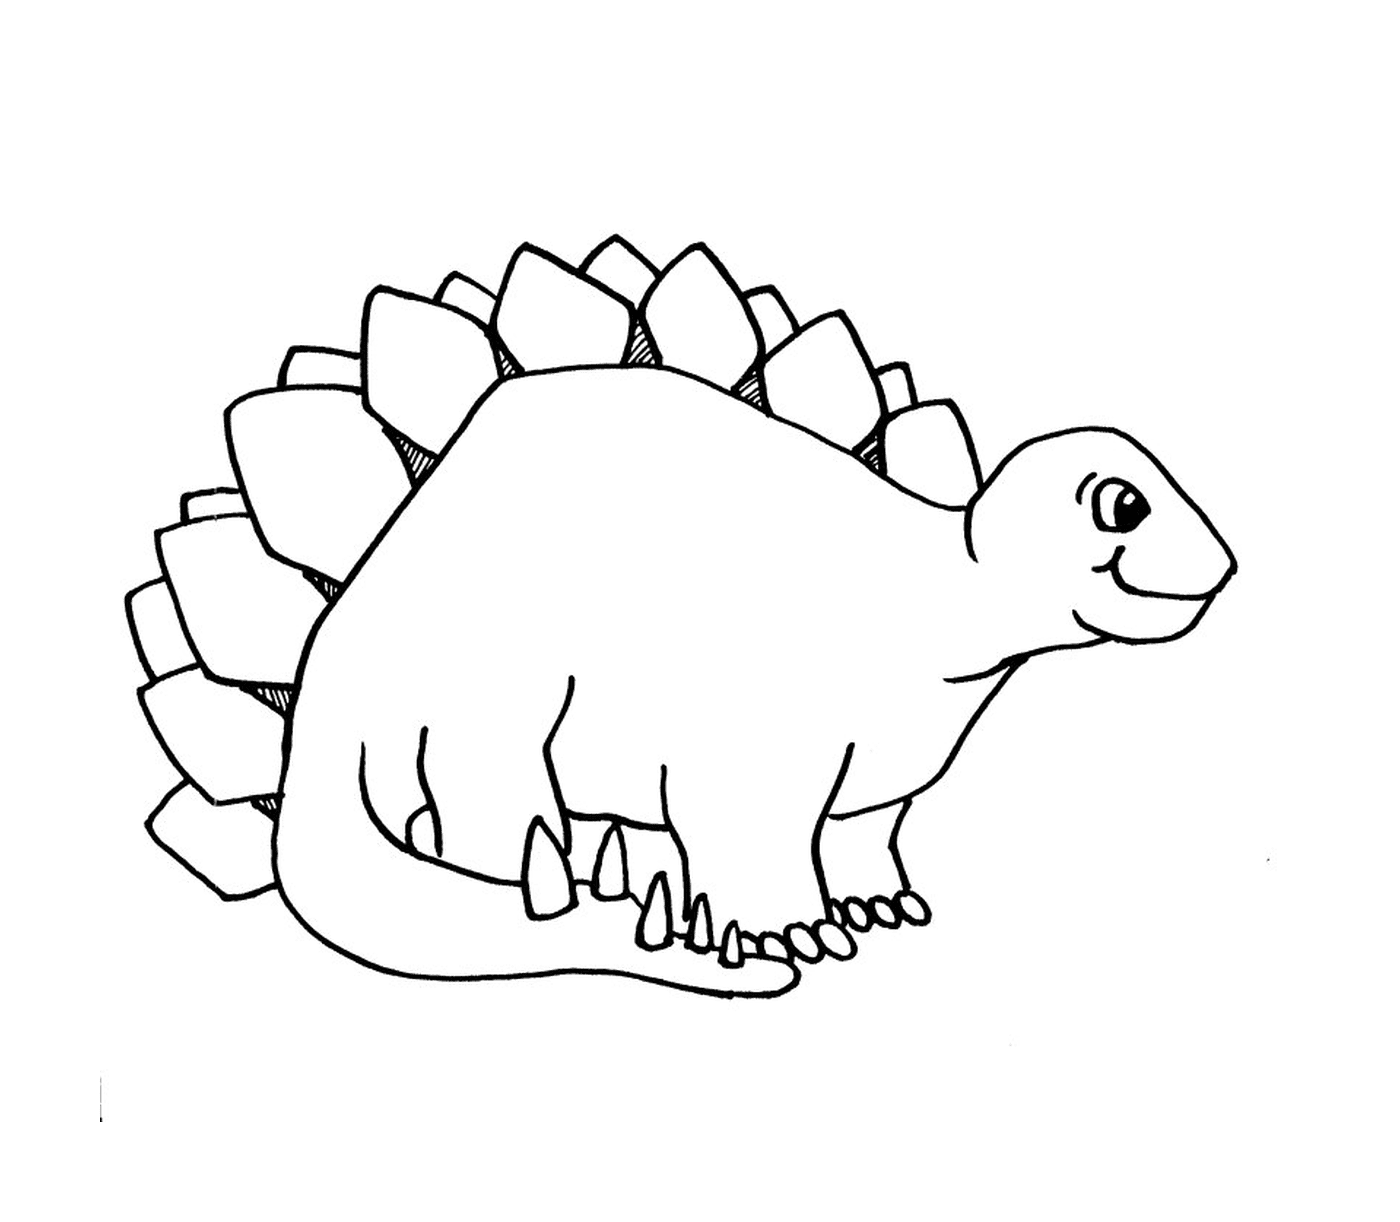  Ein Stegosaurus 